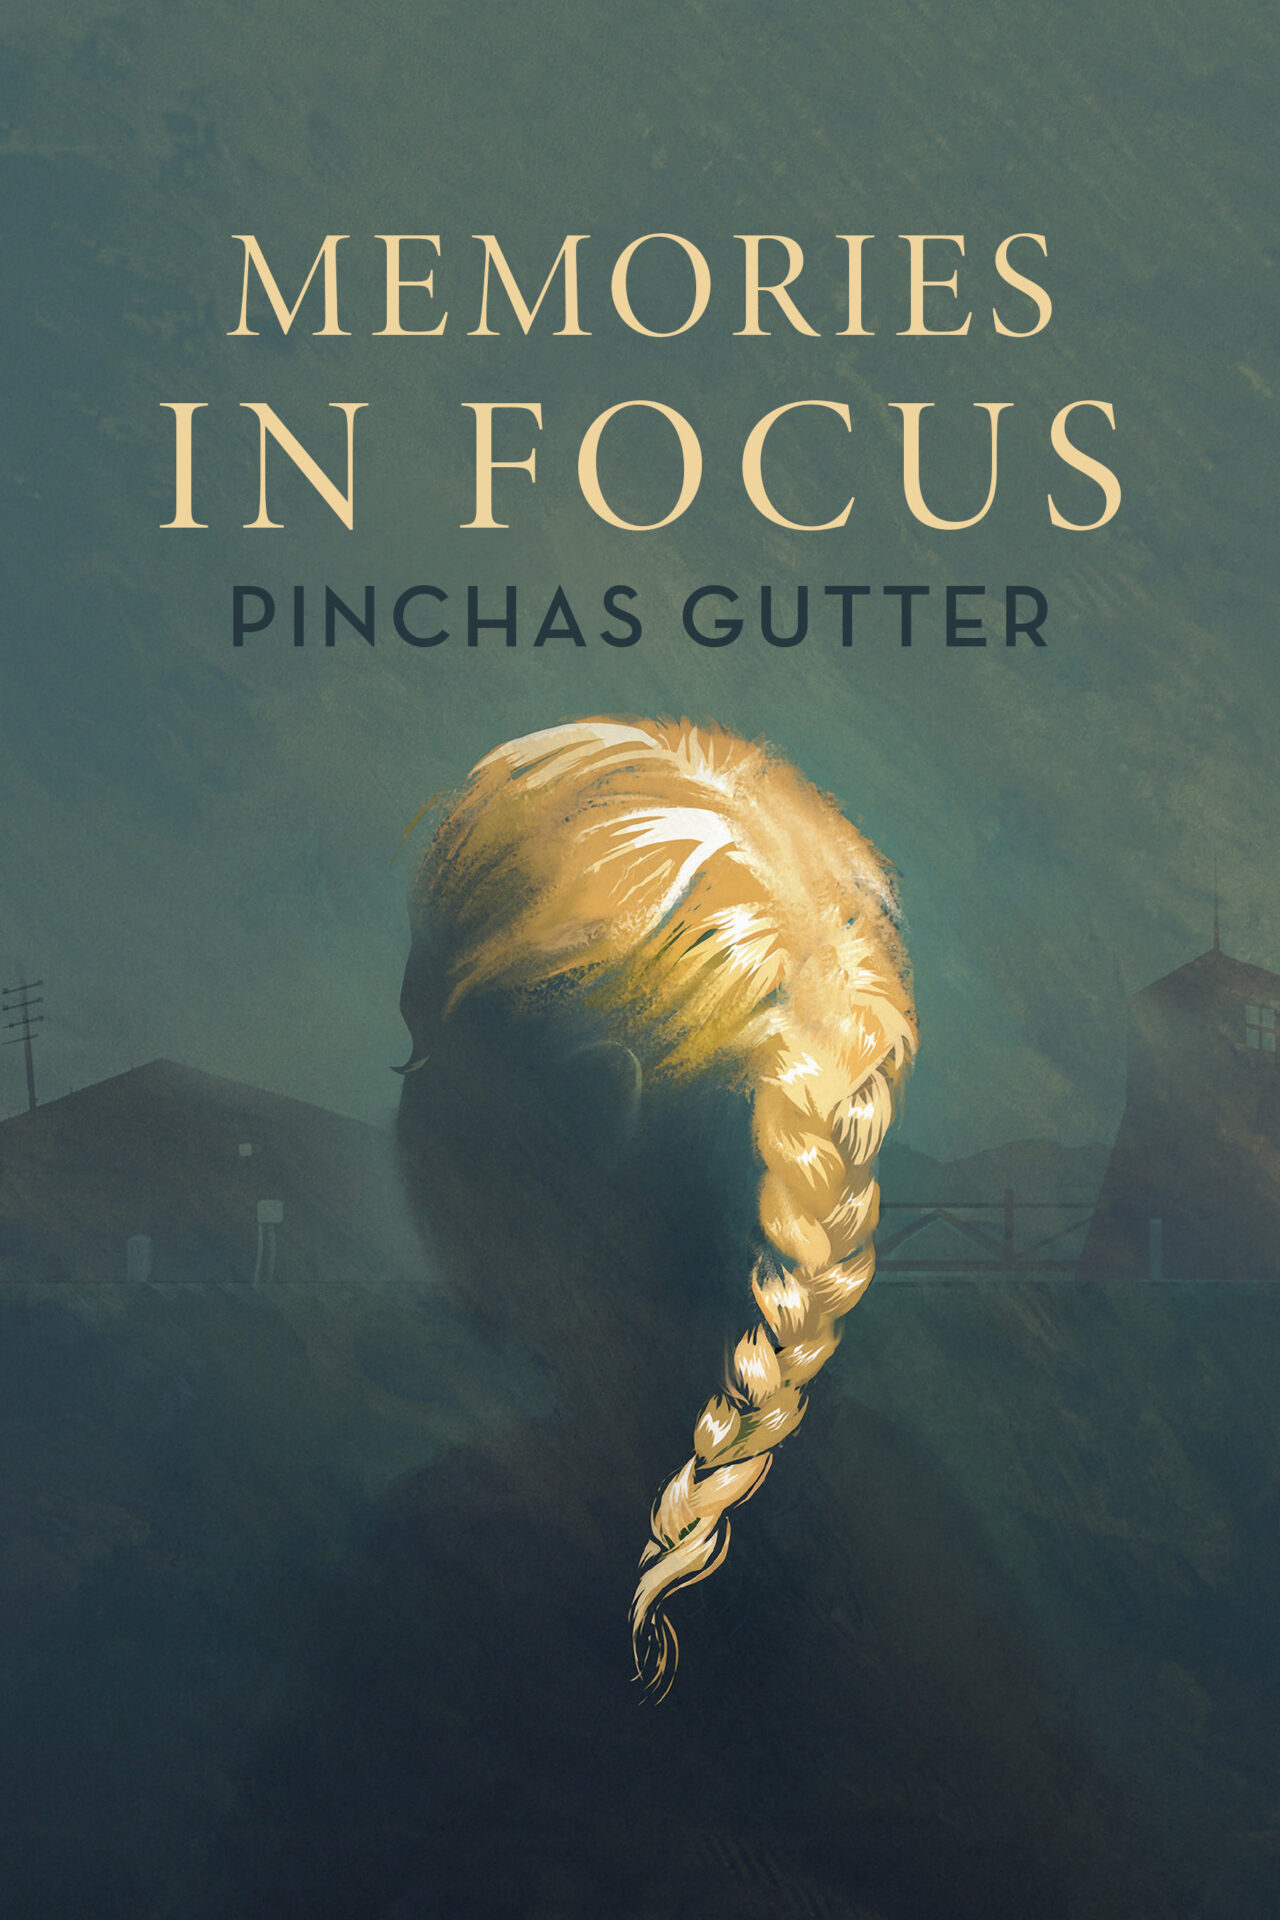 "Memories in Focus" by Pinchas Gutter